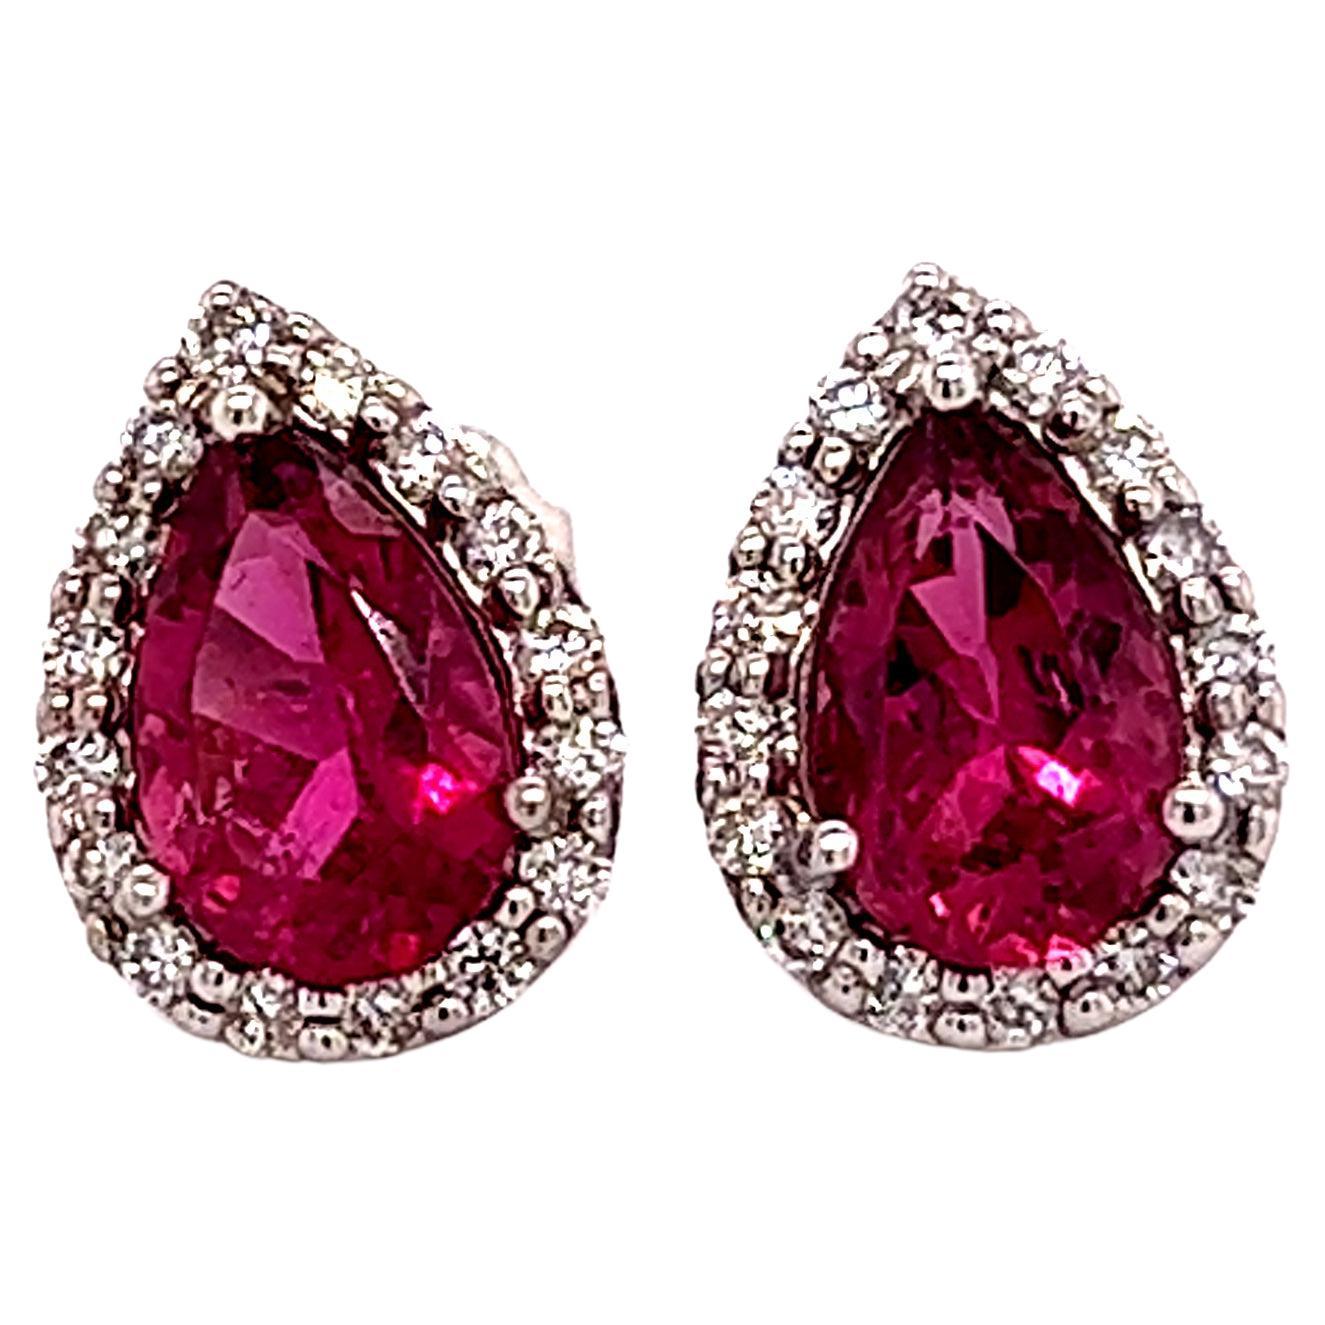 Natural Pink Tourmaline Diamond Stud Earrings 14k W Gold 2.02 TCW Certified For Sale